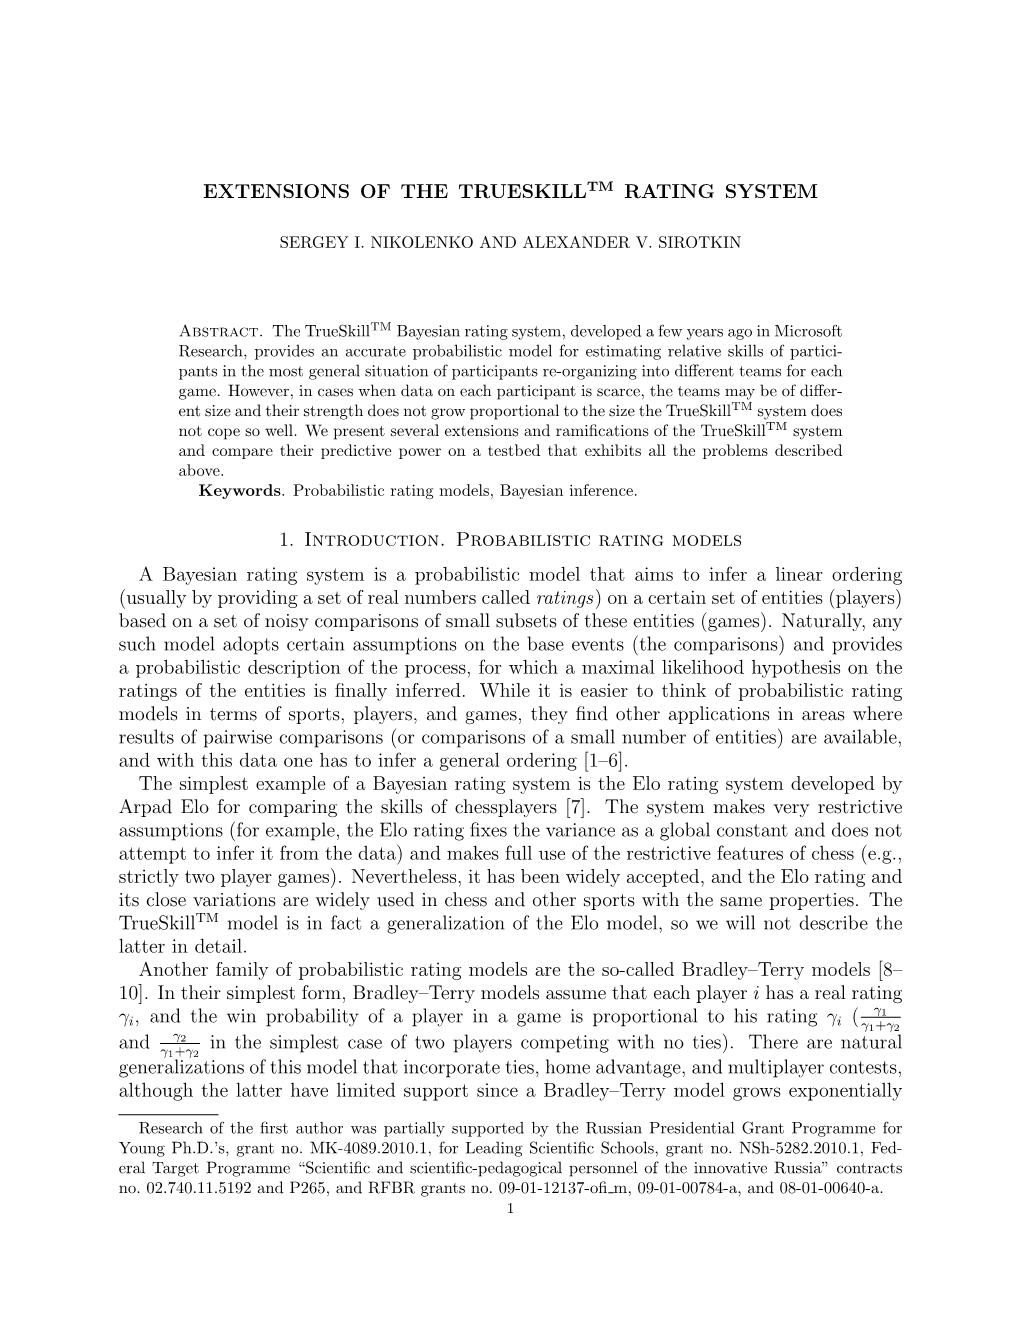 Extensions of the Trueskilltm Rating System